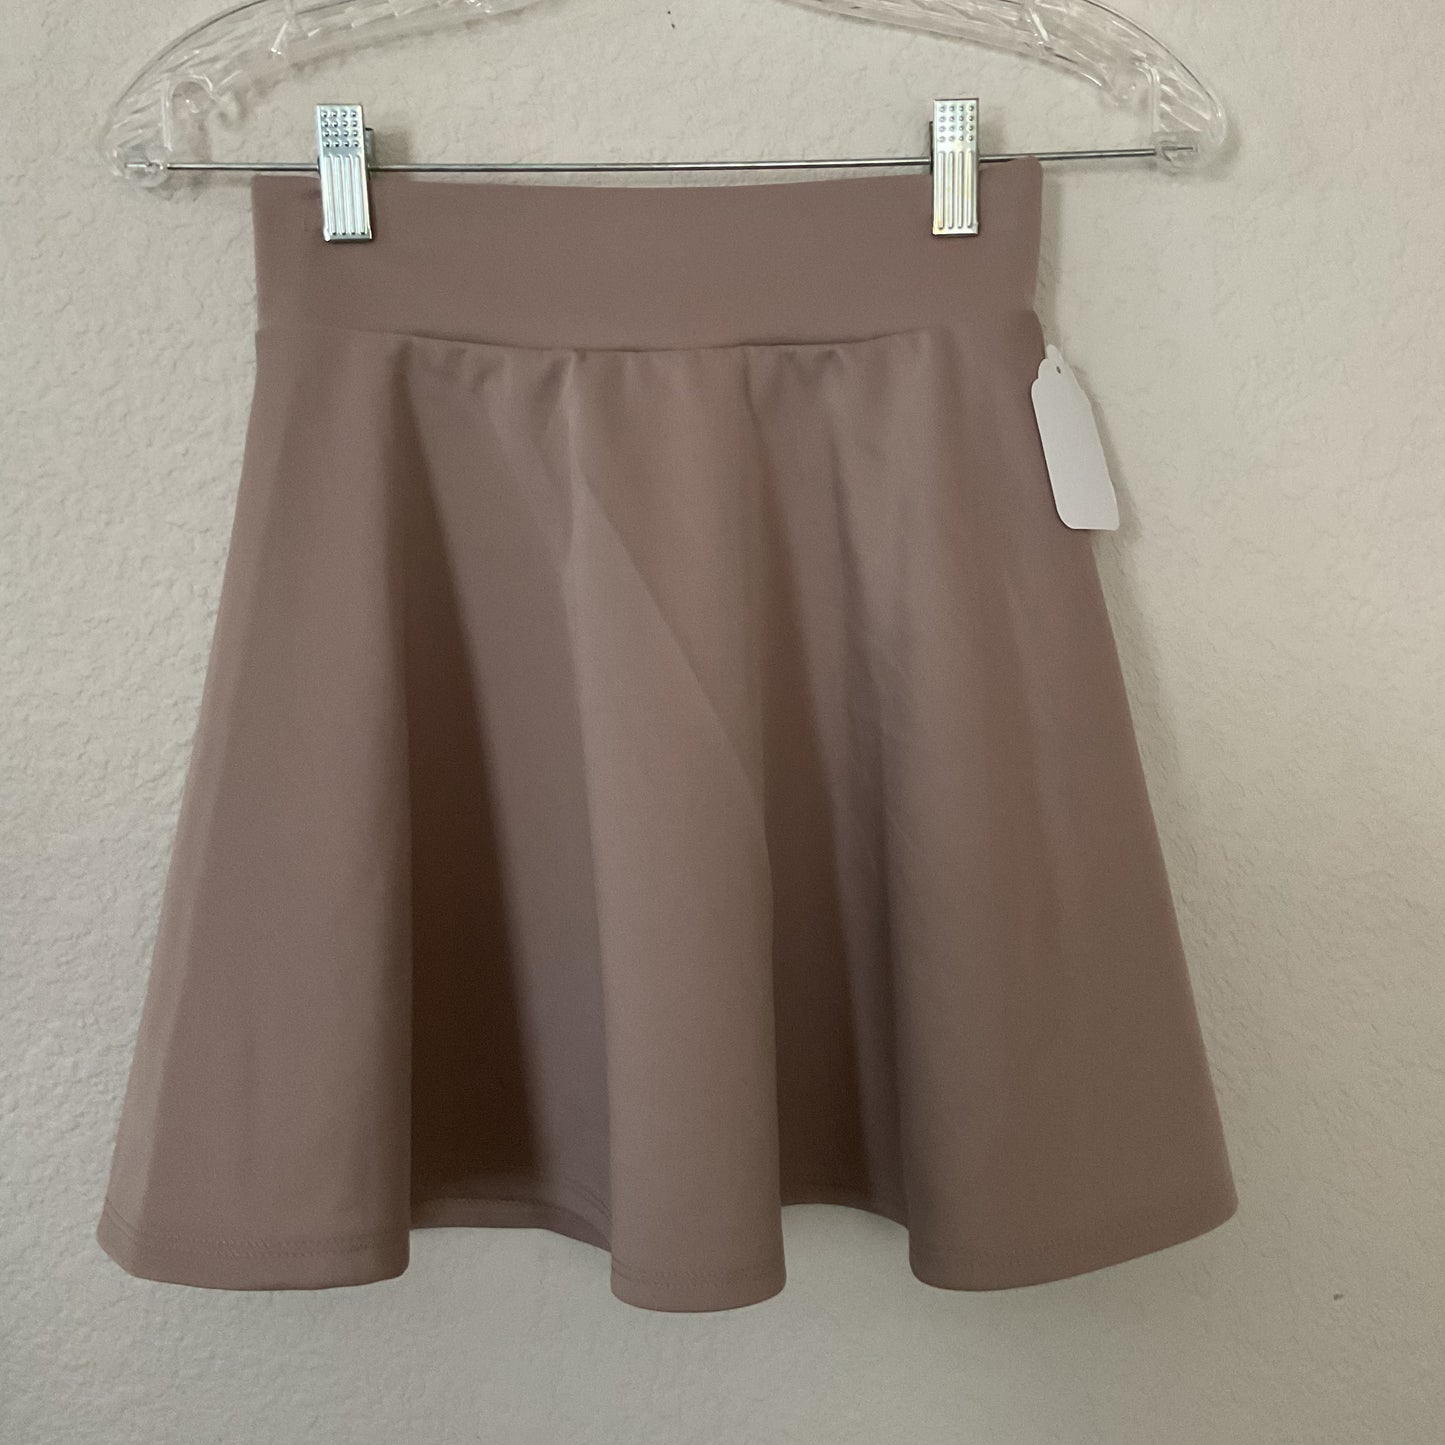 Imagenation School Circular Girls Skirt Size S(10/12).